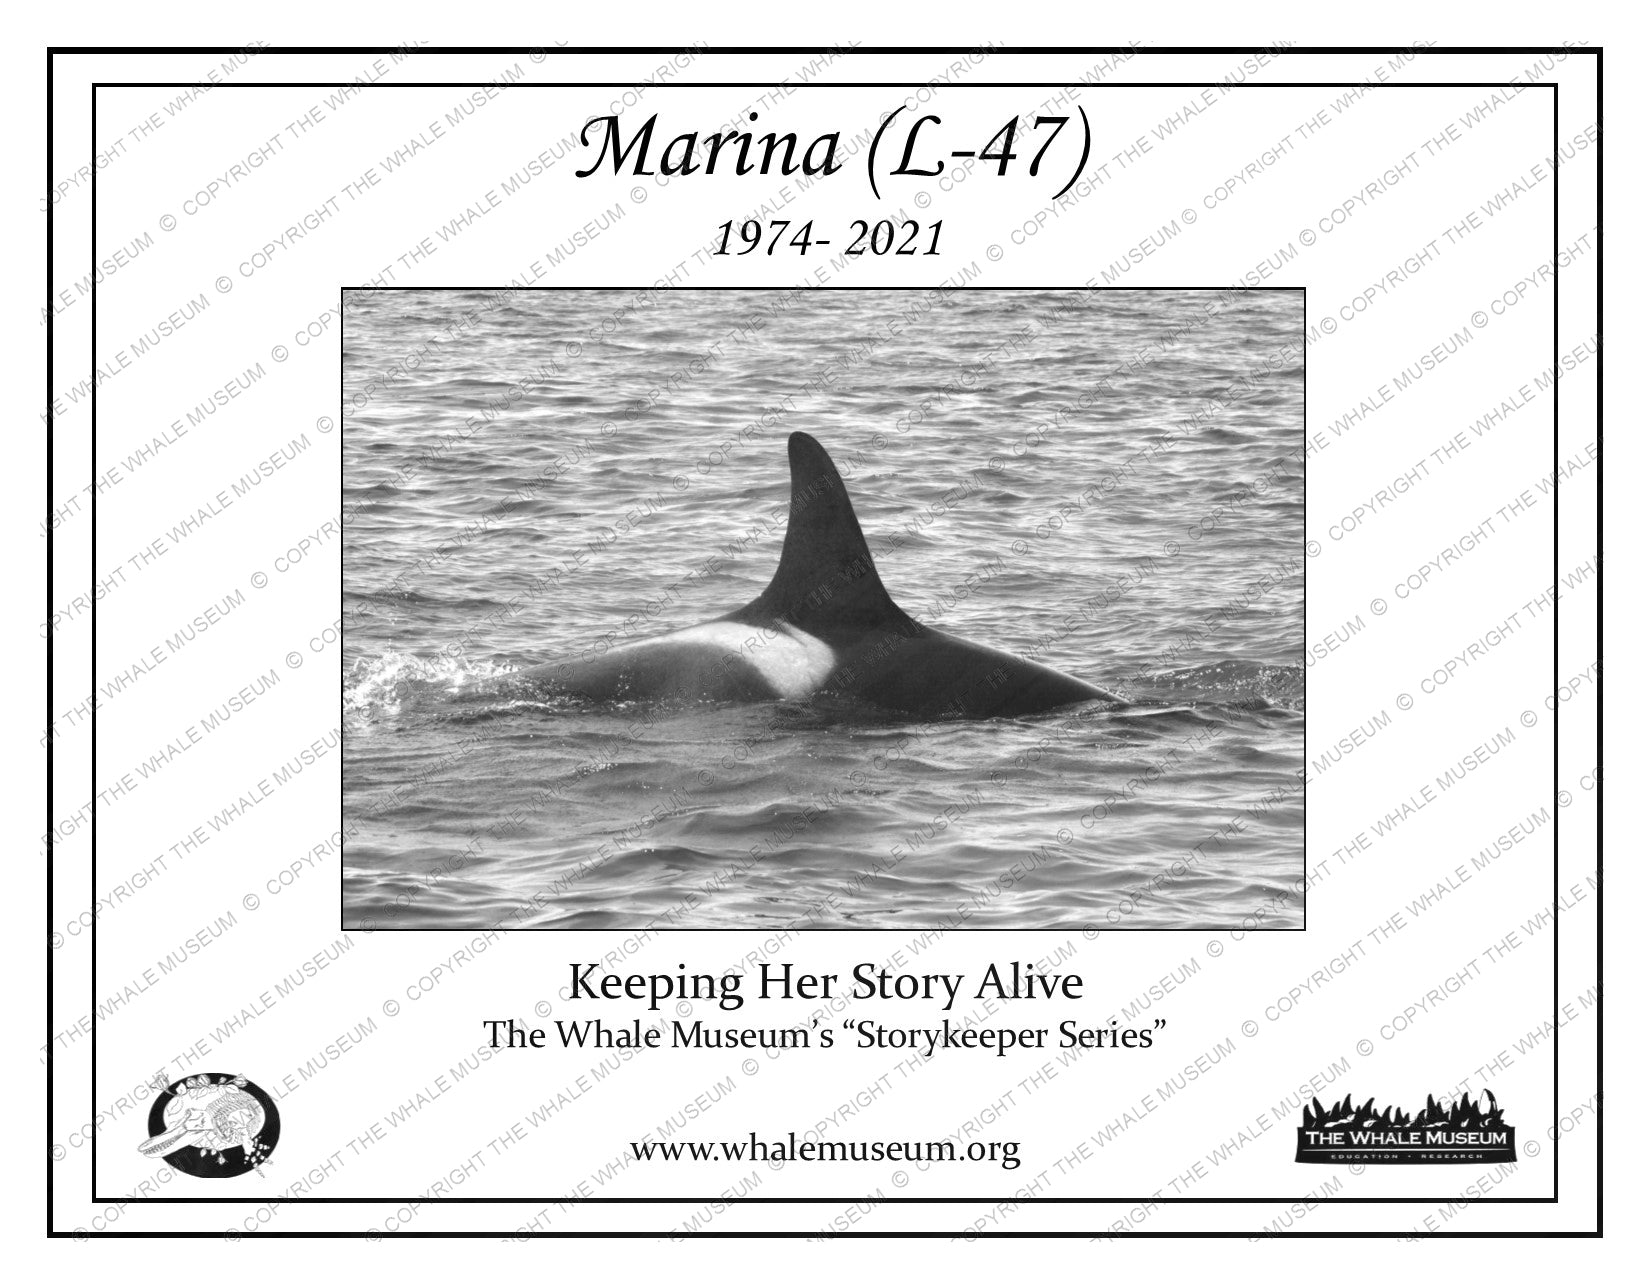 Marina (L-47) Storykeeper